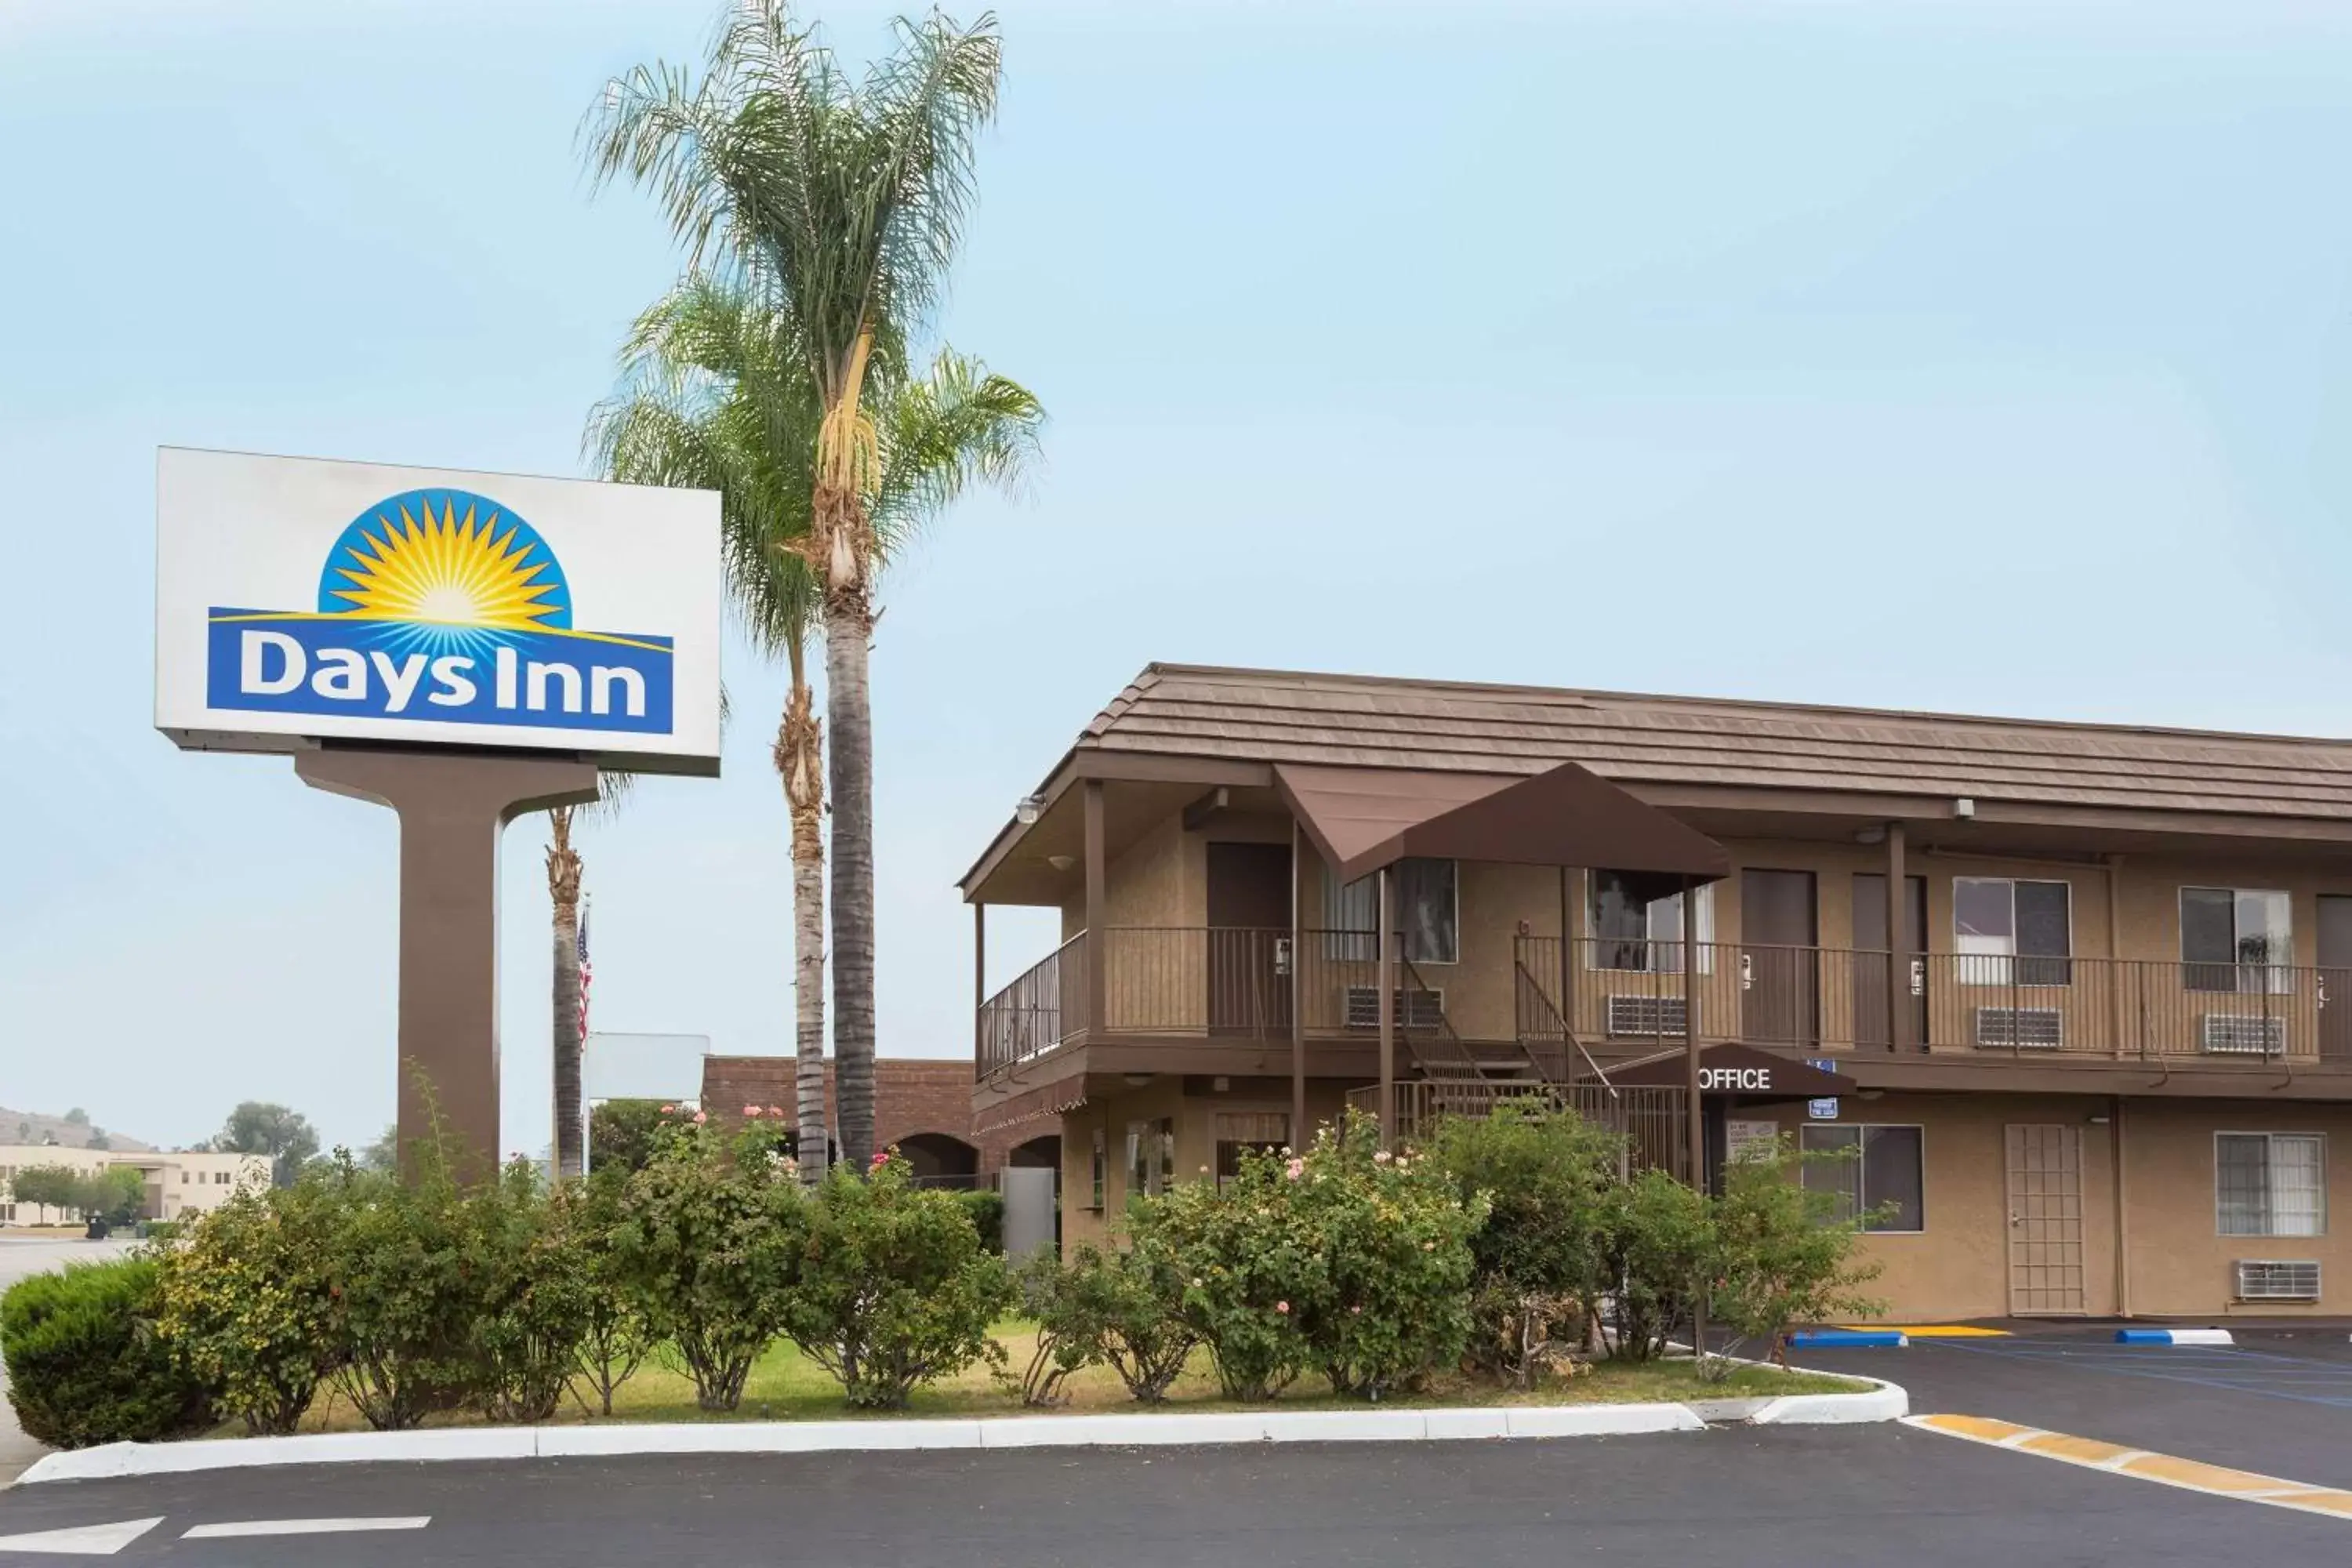 Property building in Days Inn by Wyndham in San Bernardino